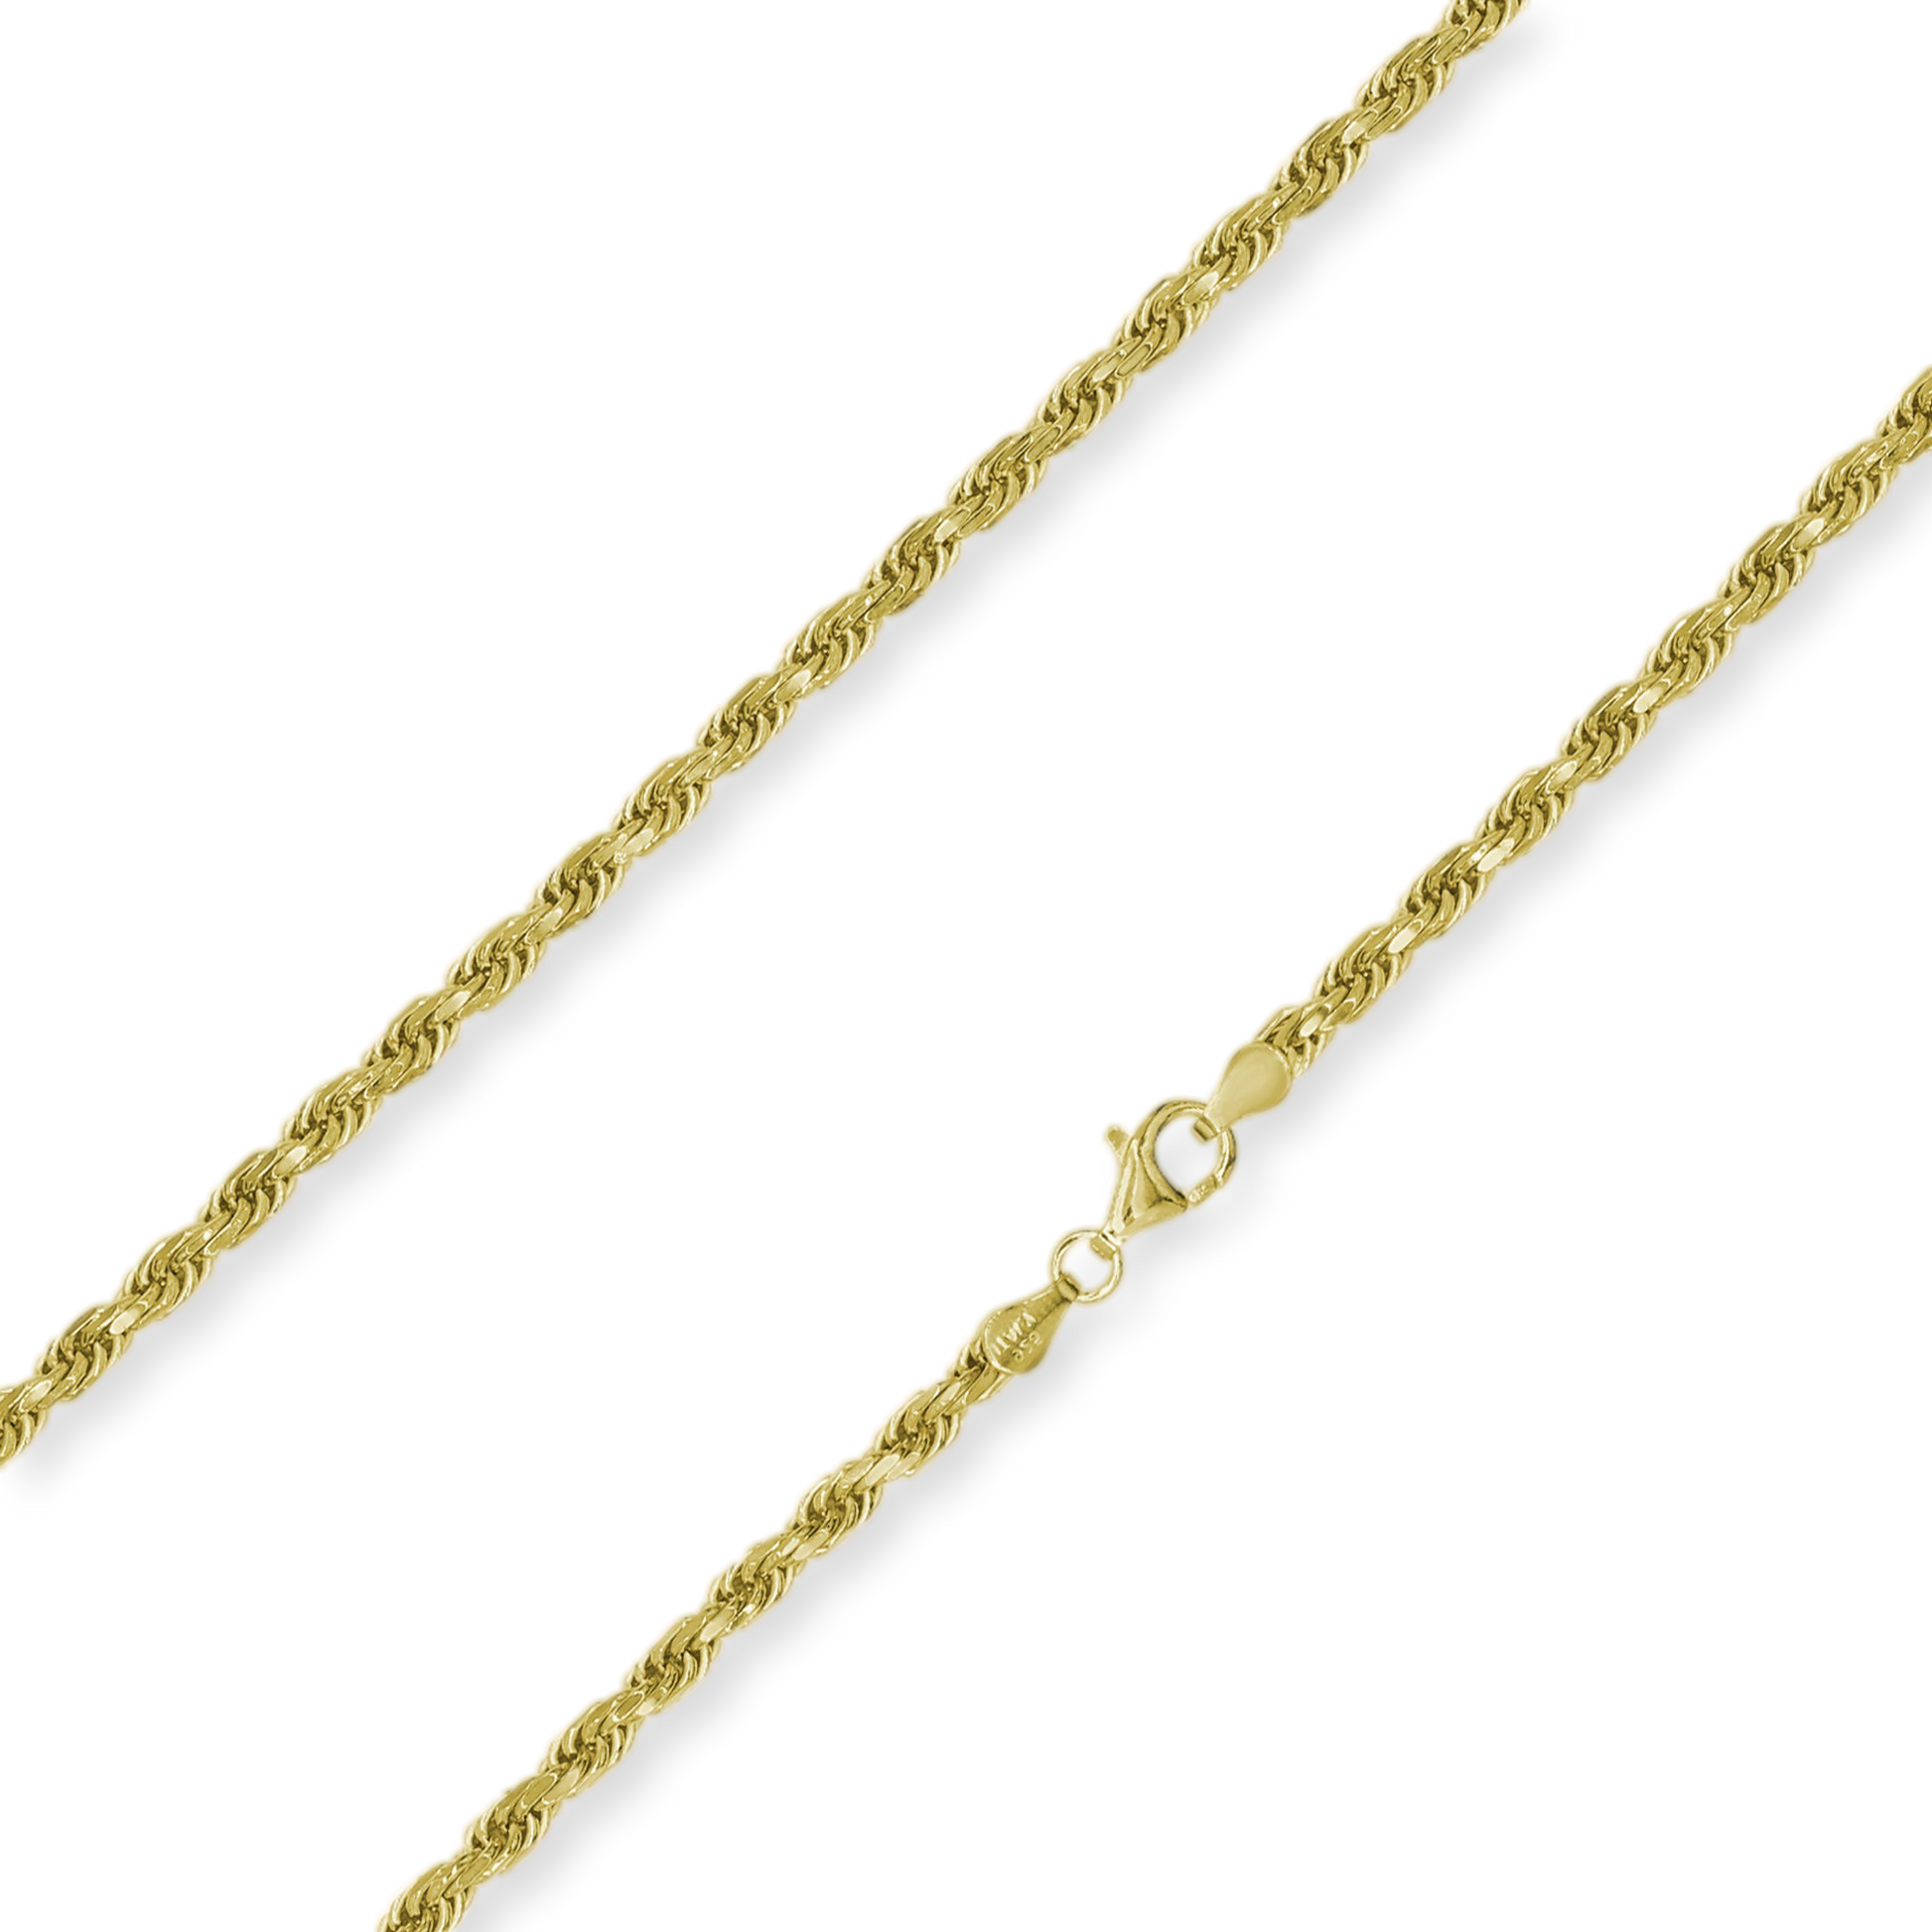 Stellari Gold 18 Karat over Sterling Silver 4mm Diamond Cut Rope Chain